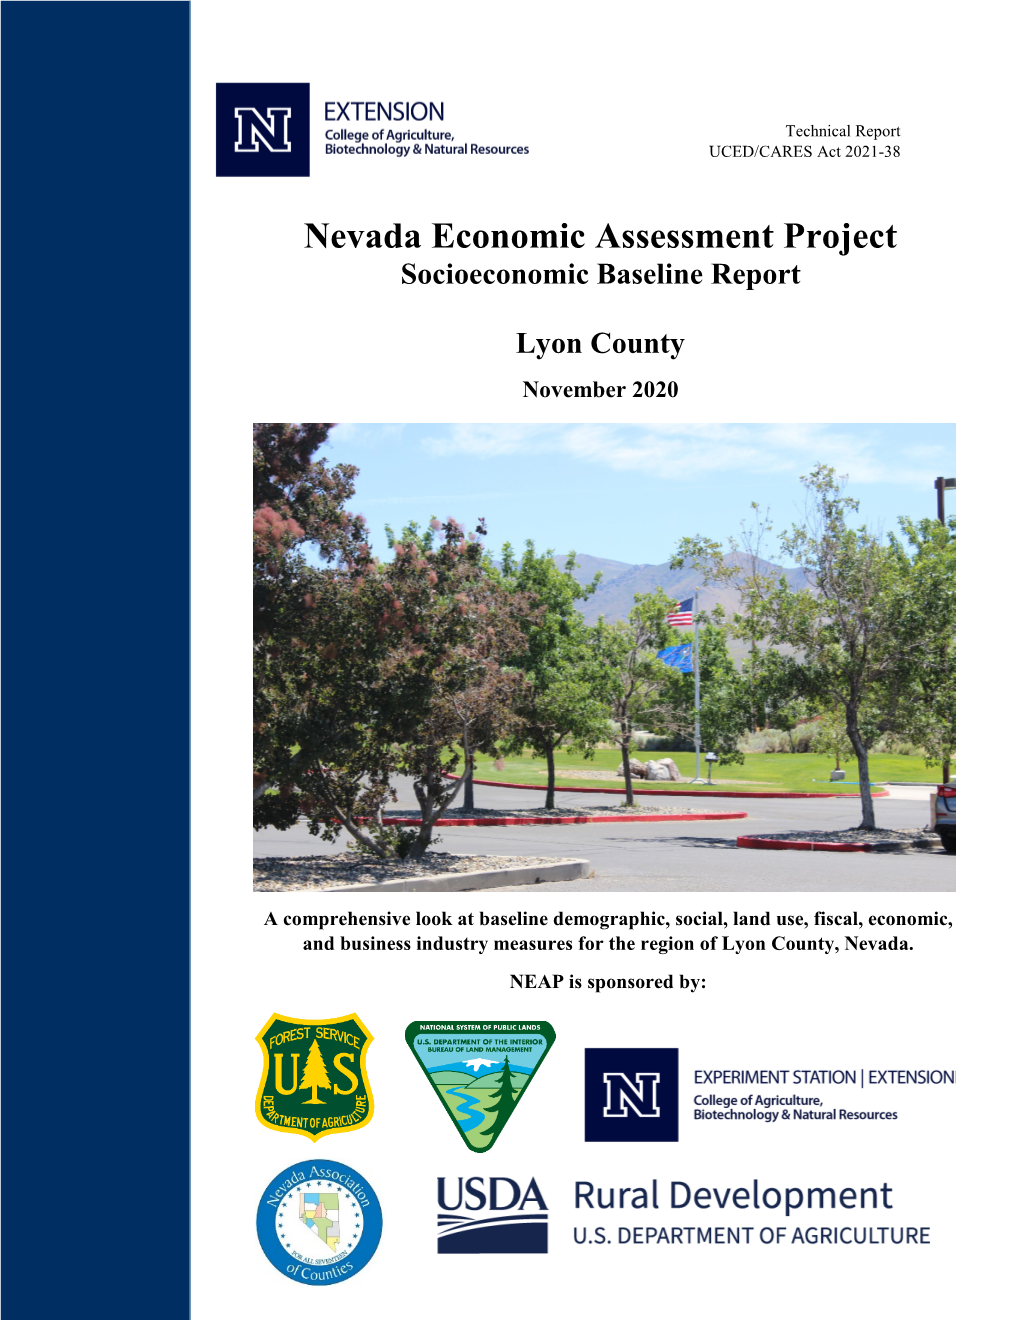 Nevada Economic Assessment Project Socioeconomic Baseline Report